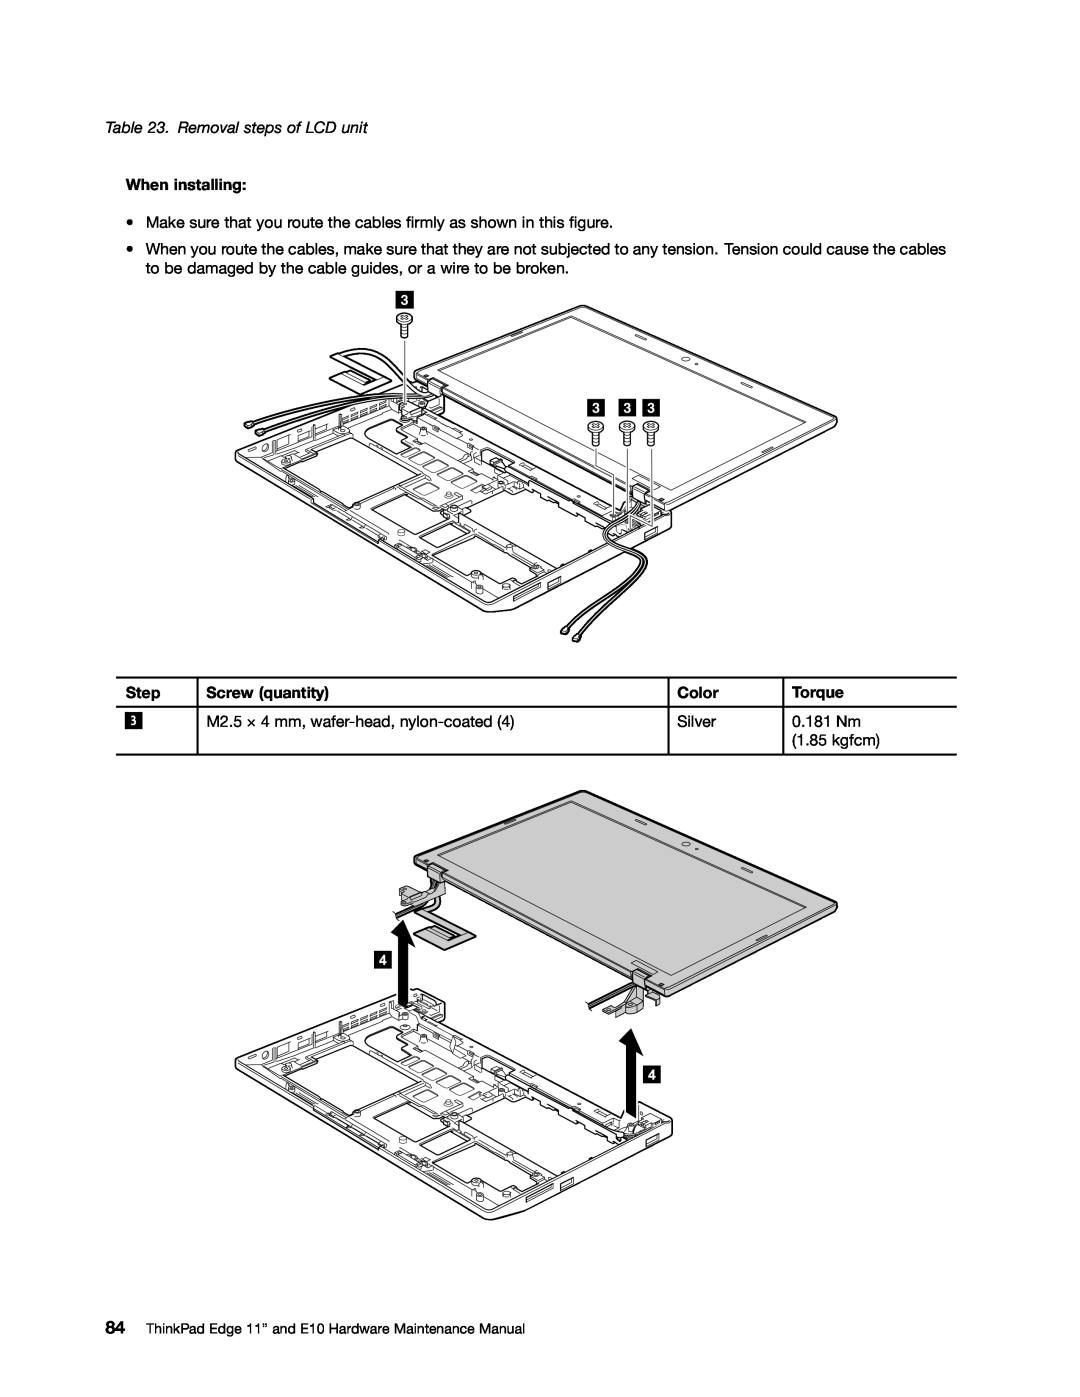 Lenovo manual Removal steps of LCD unit, ThinkPad Edge 11” and E10 Hardware Maintenance Manual 